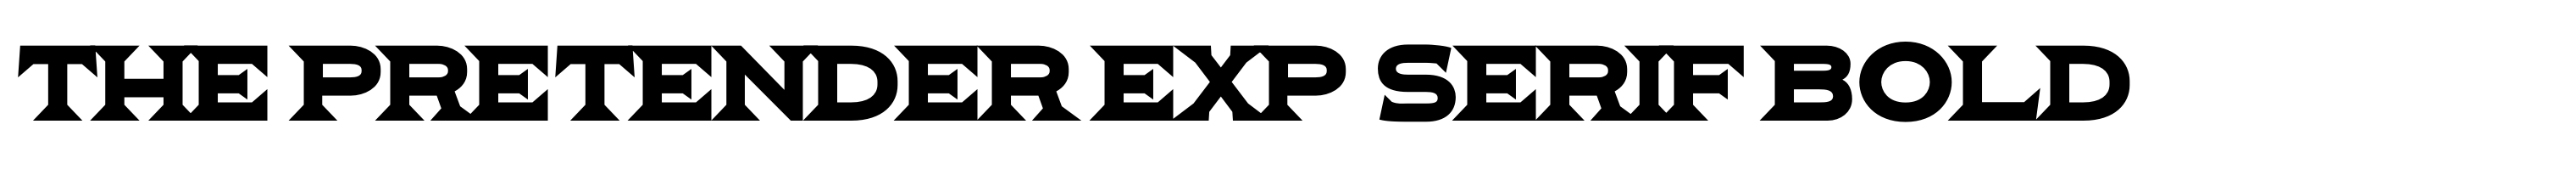 The Pretender Exp Serif Bold